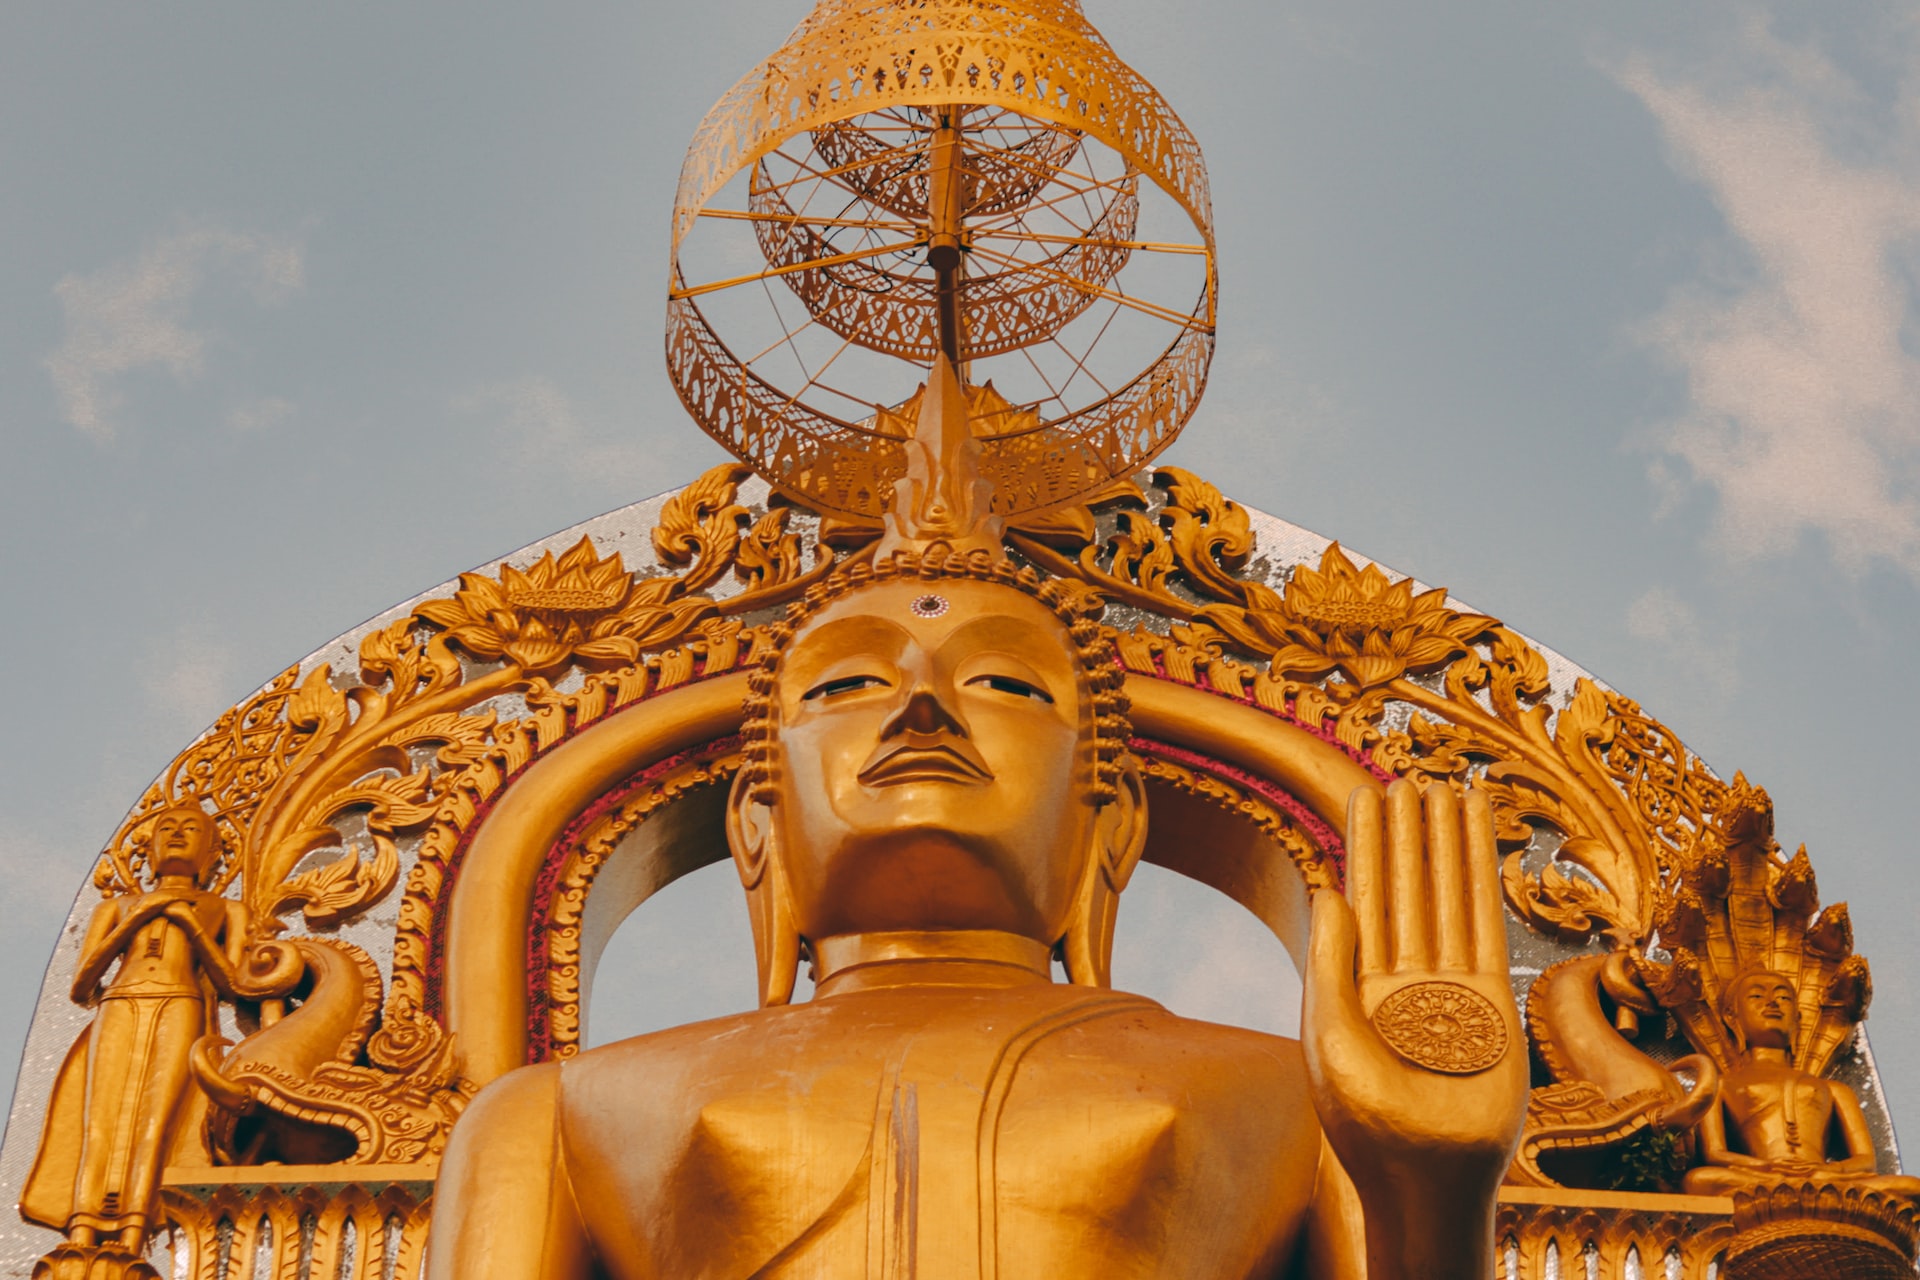 A large, gold, Buddha figure in Bangkok.